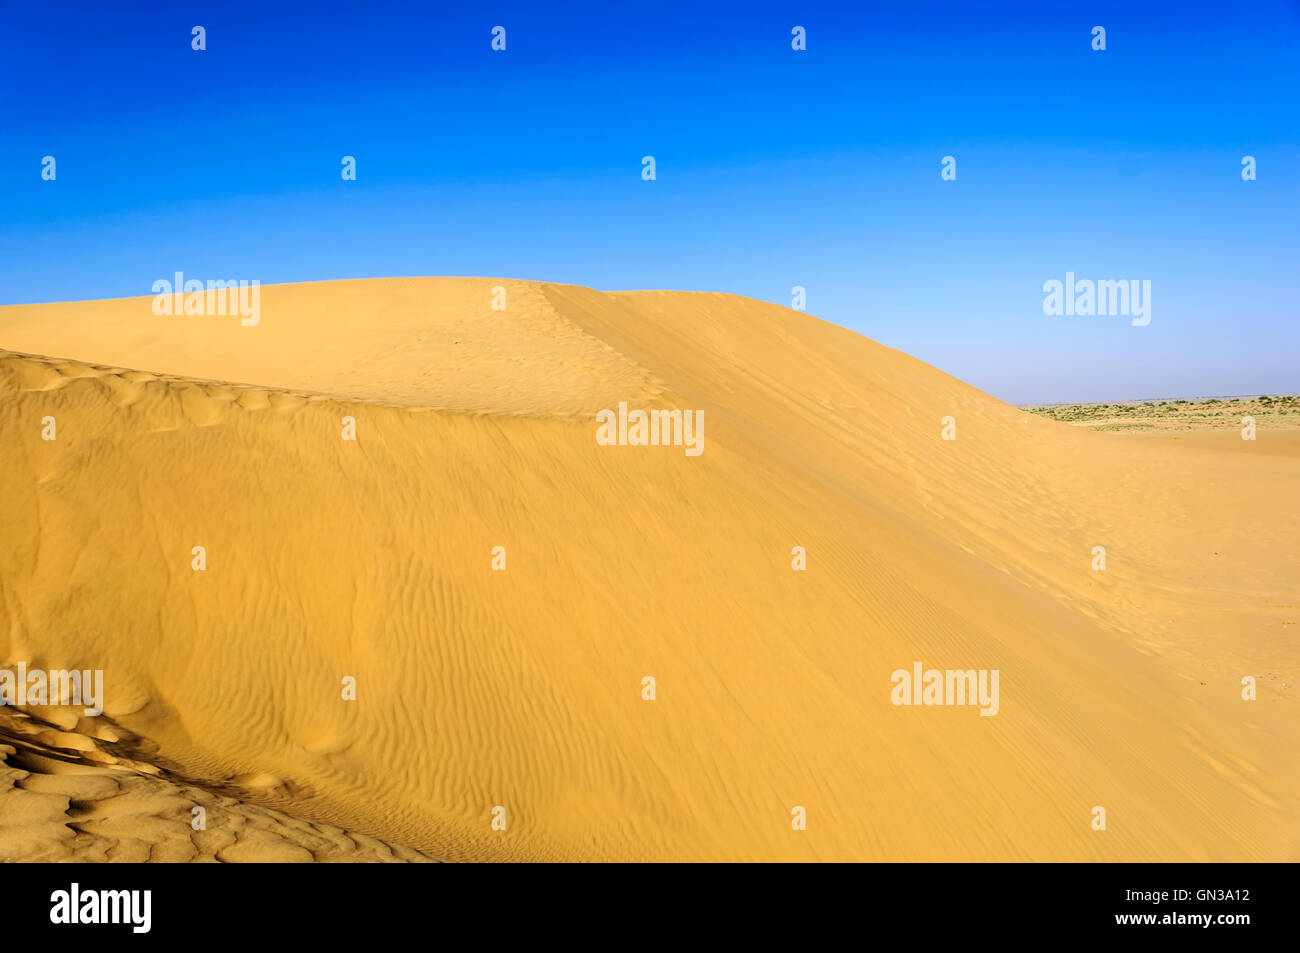 Landscape Sand dunes, SAM dunes, ripples, Desert National Park of Thar Desert of India with copy space Stock Photo